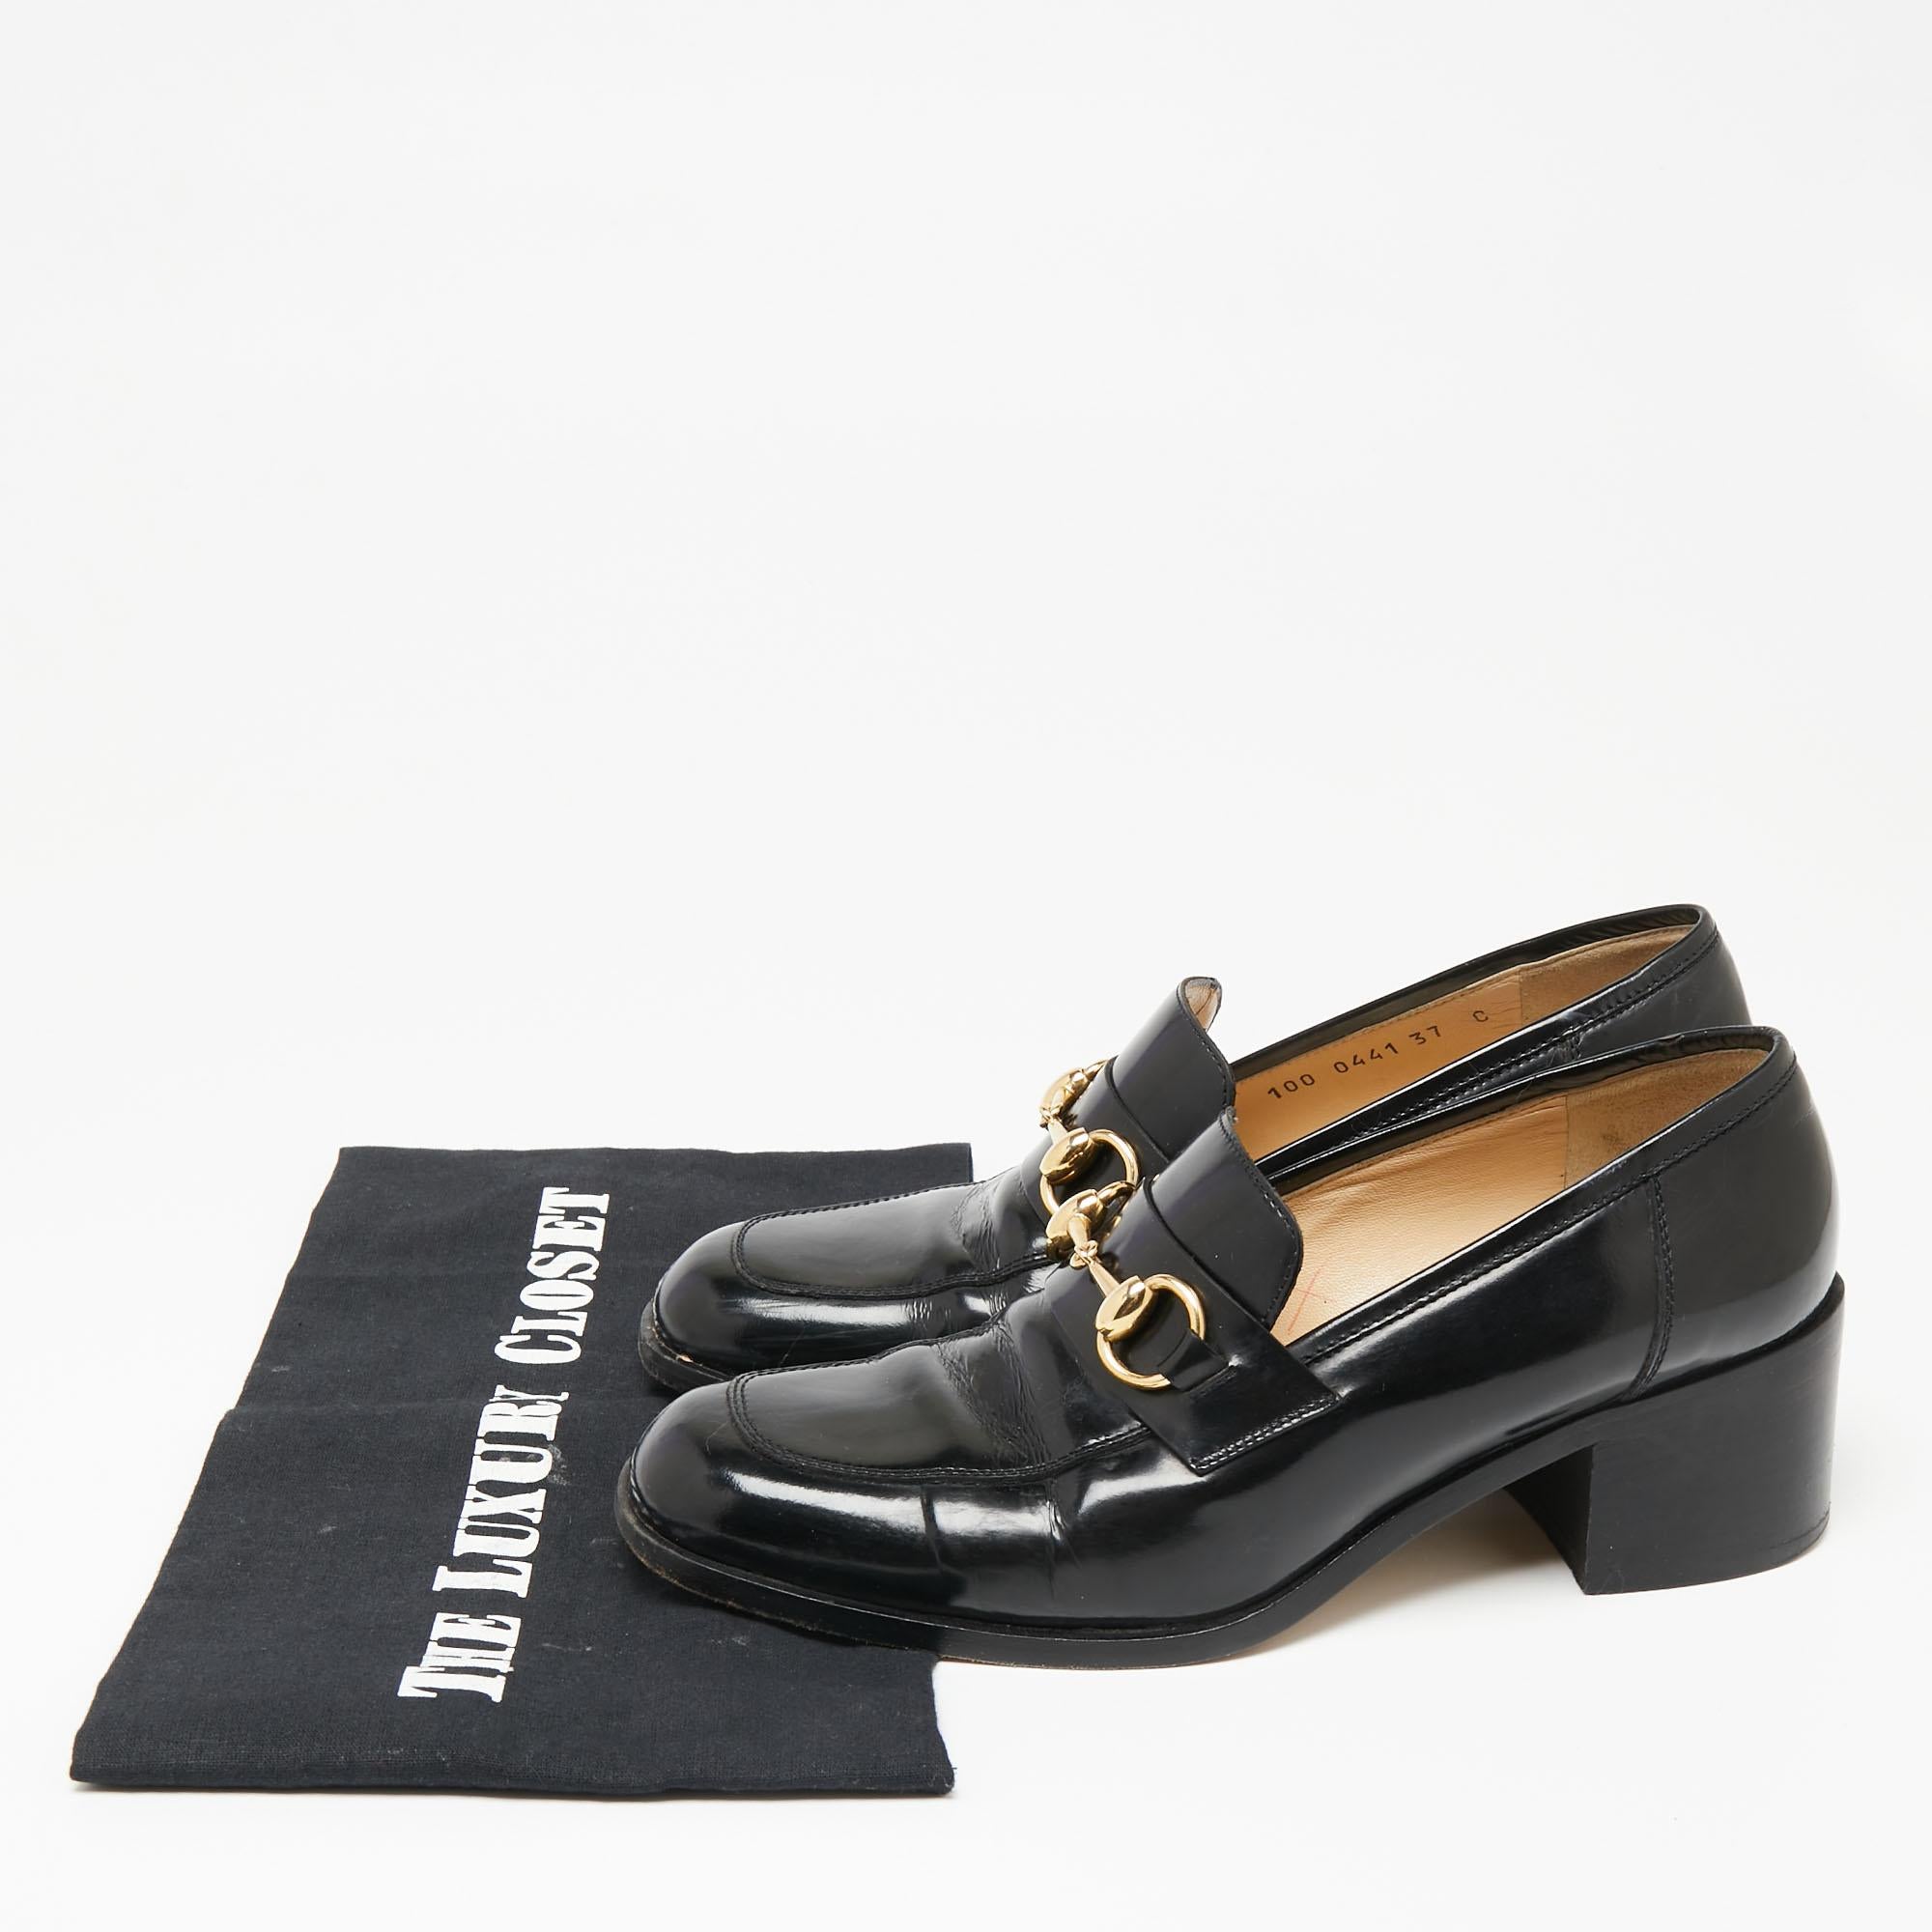 Gucci Black Leather Horsebit Loafer Pumps Size 37 3